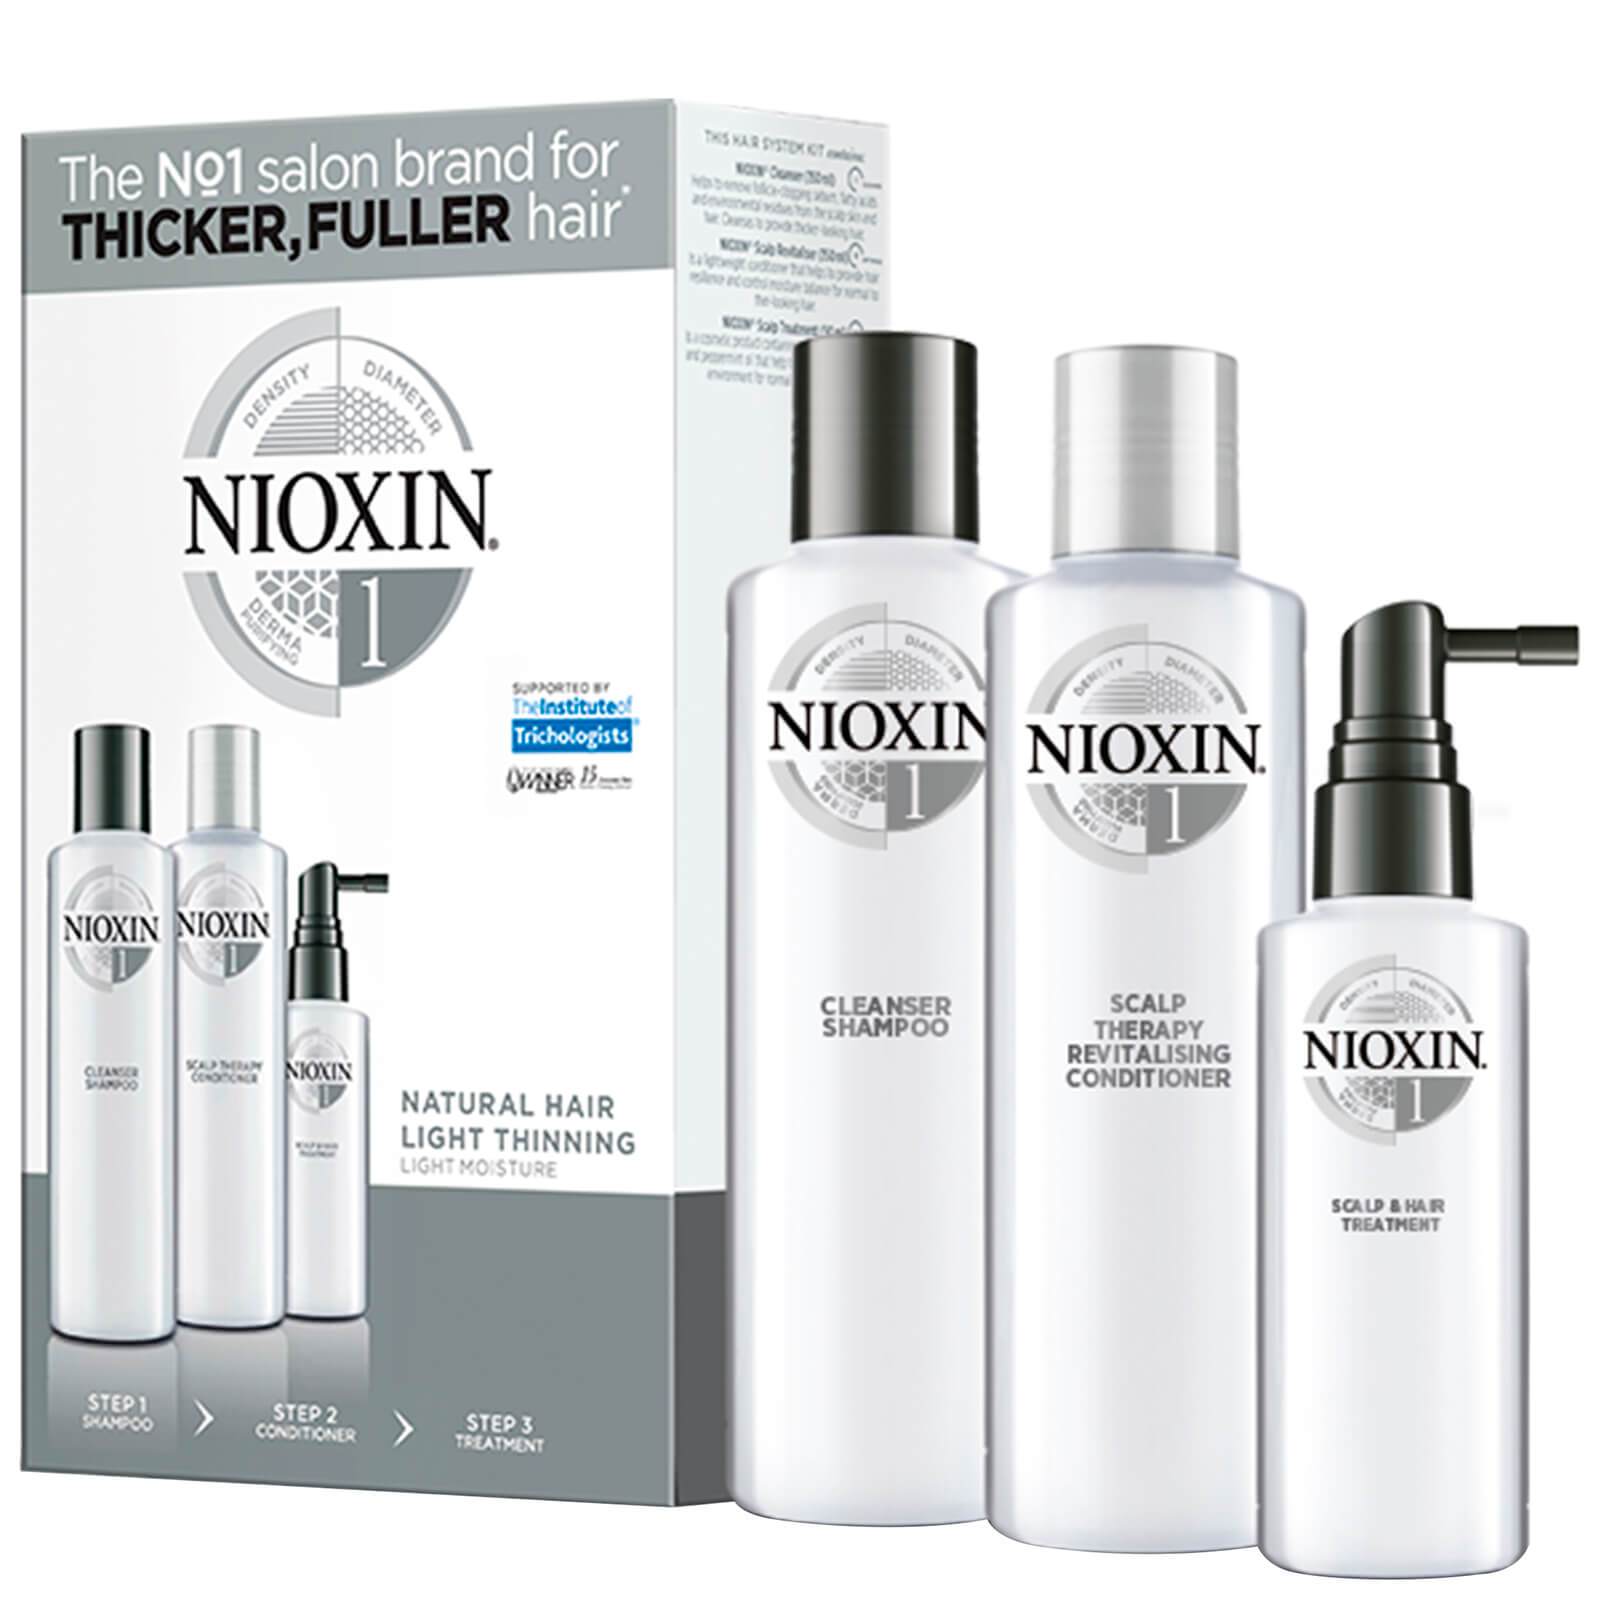 Nioxin Nr.1 Natural Hair Light Thinning 300ml